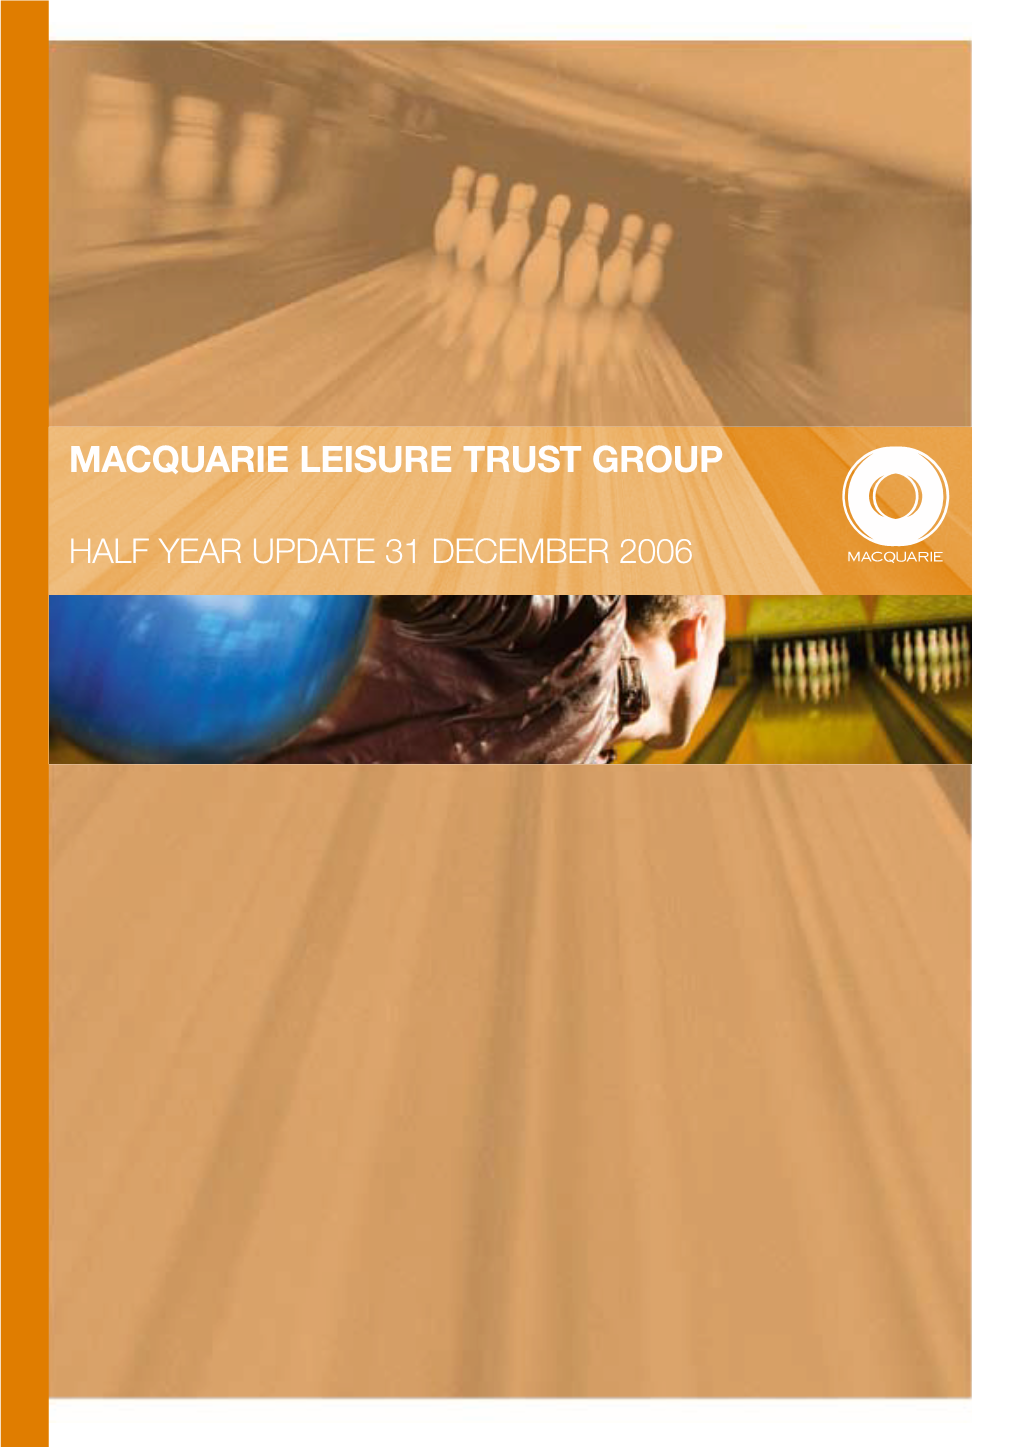 Macquarie Leisure Trust Group